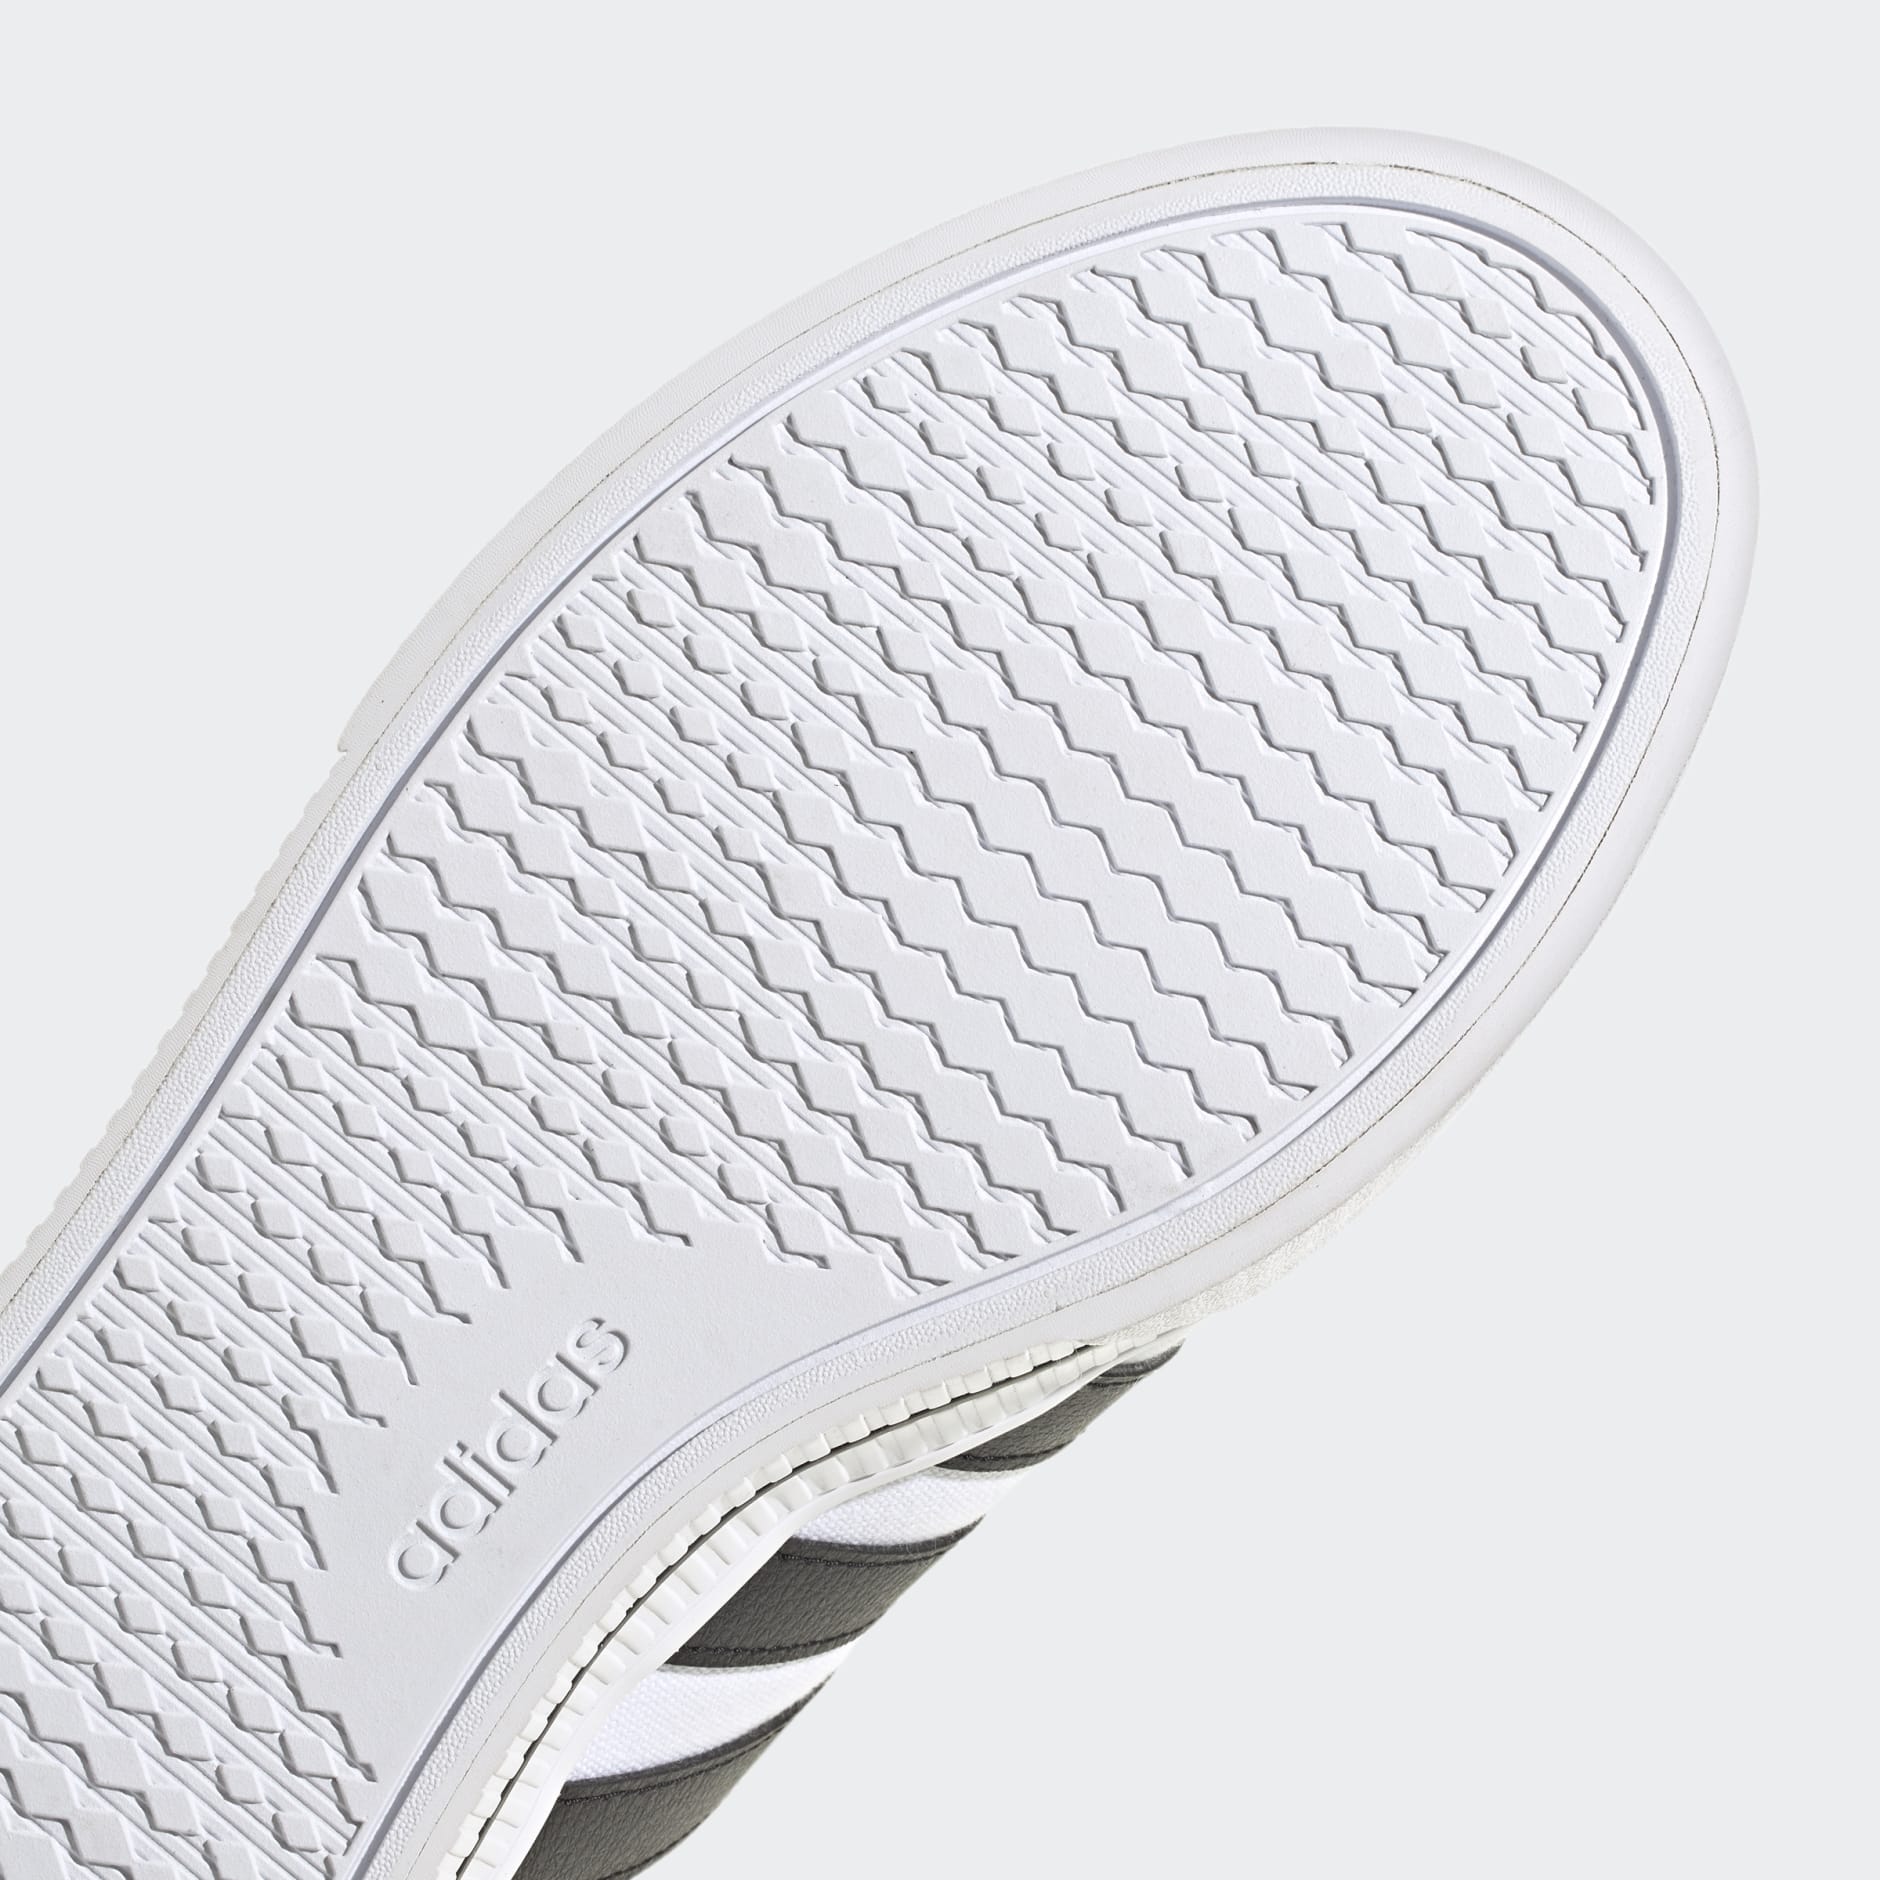 adidas VL Court 3.0 Sneaker - Women's - Free Shipping